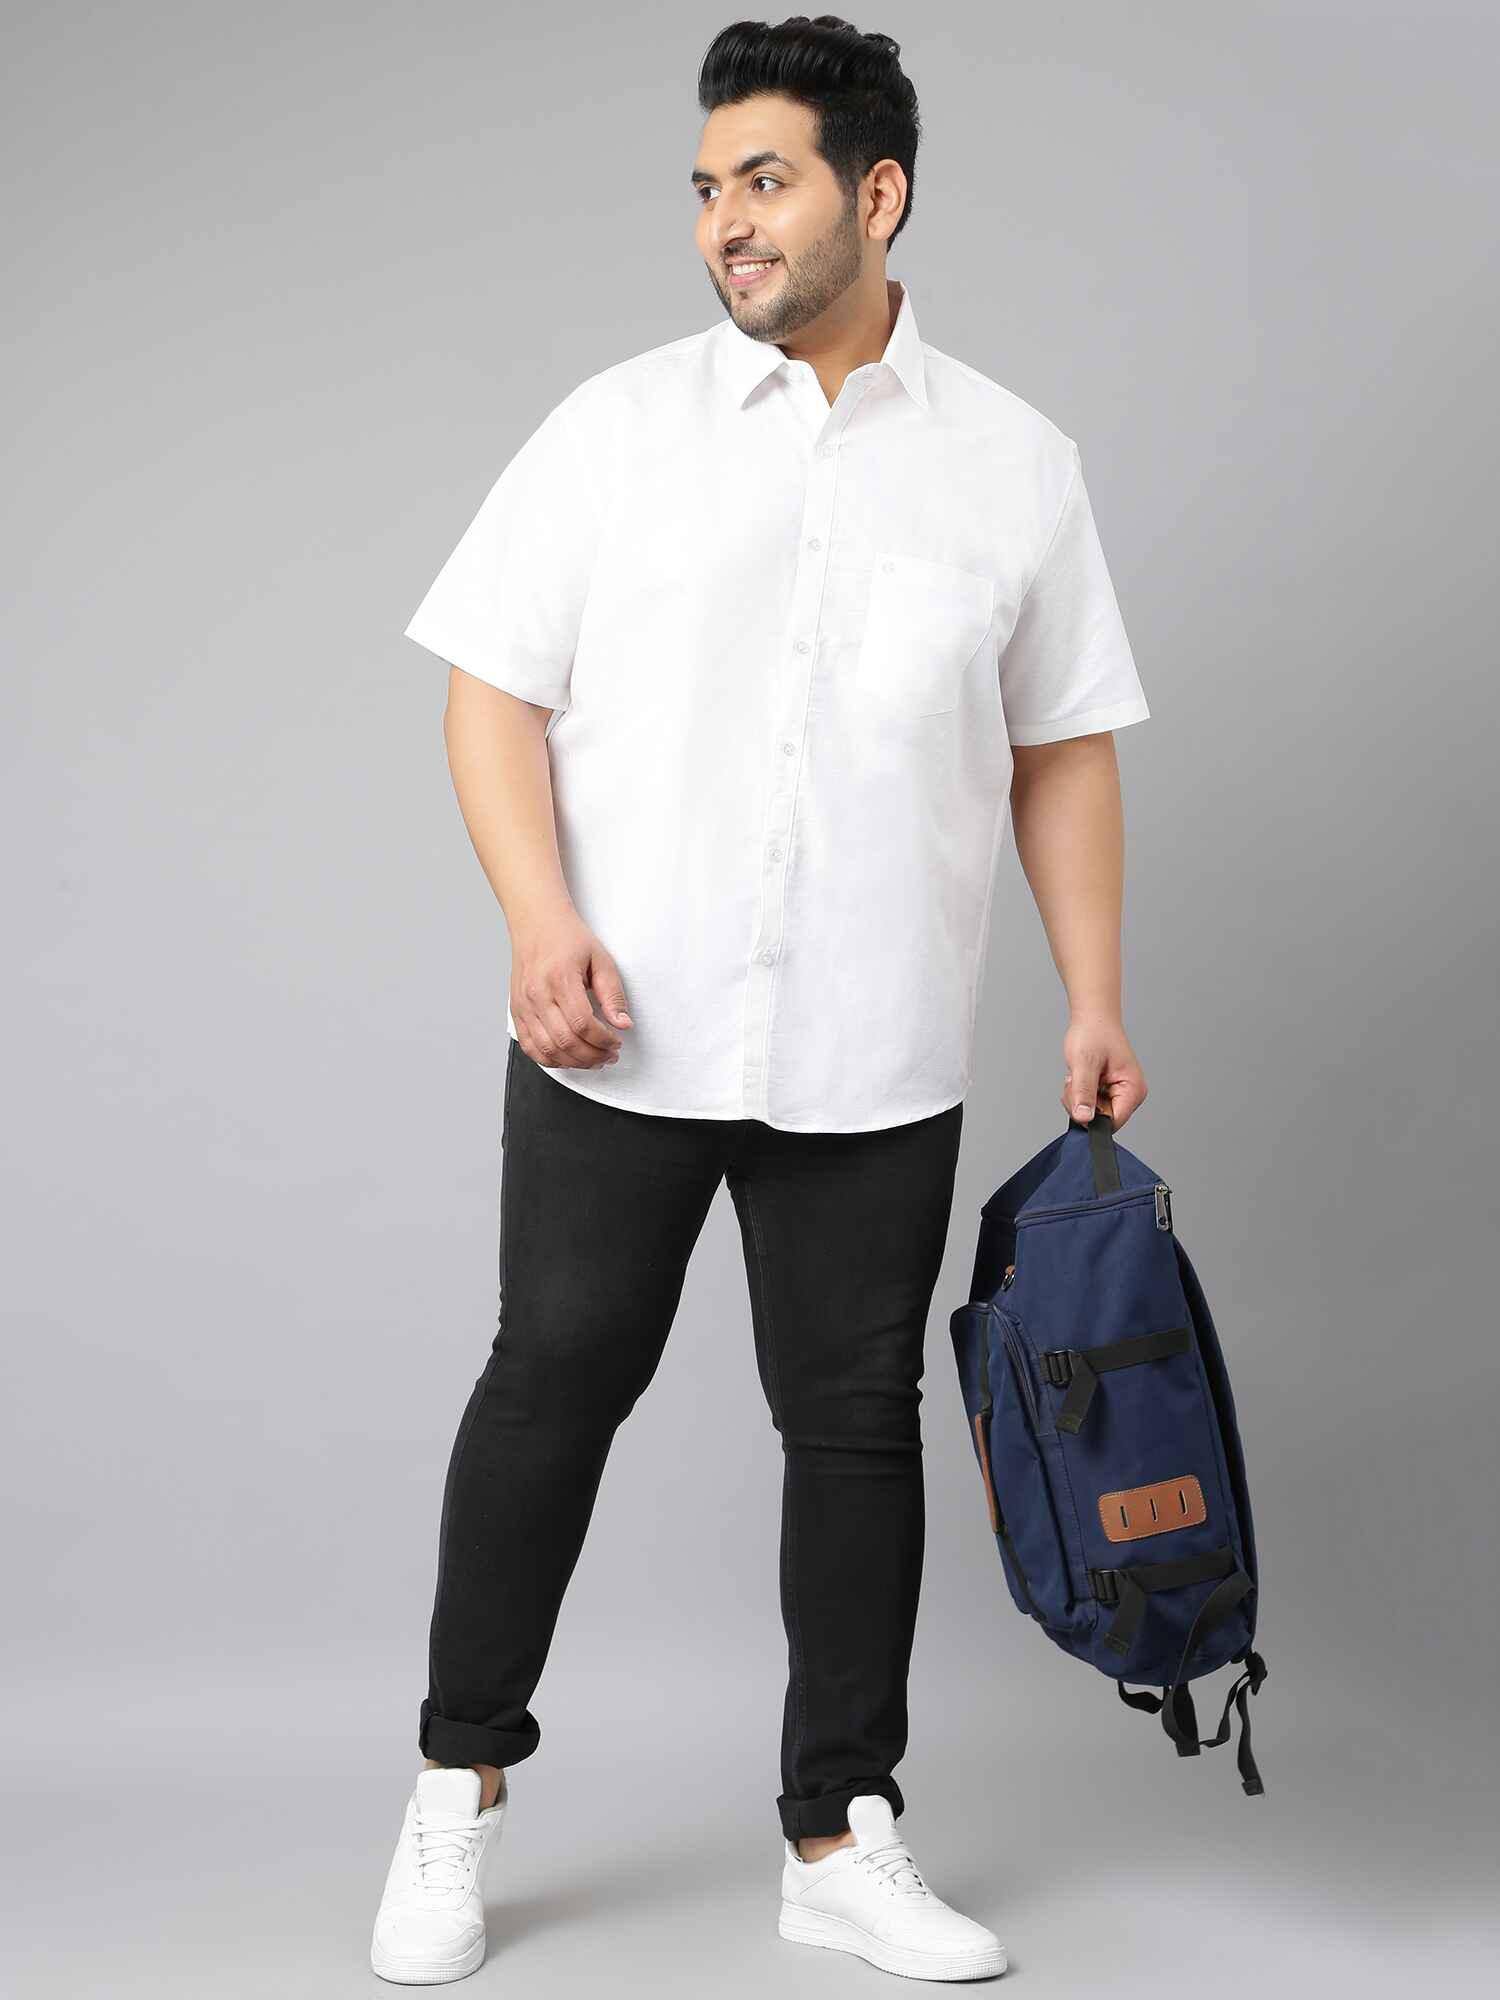 White Linen Half Shirt Men's Plus Size - Guniaa Fashions